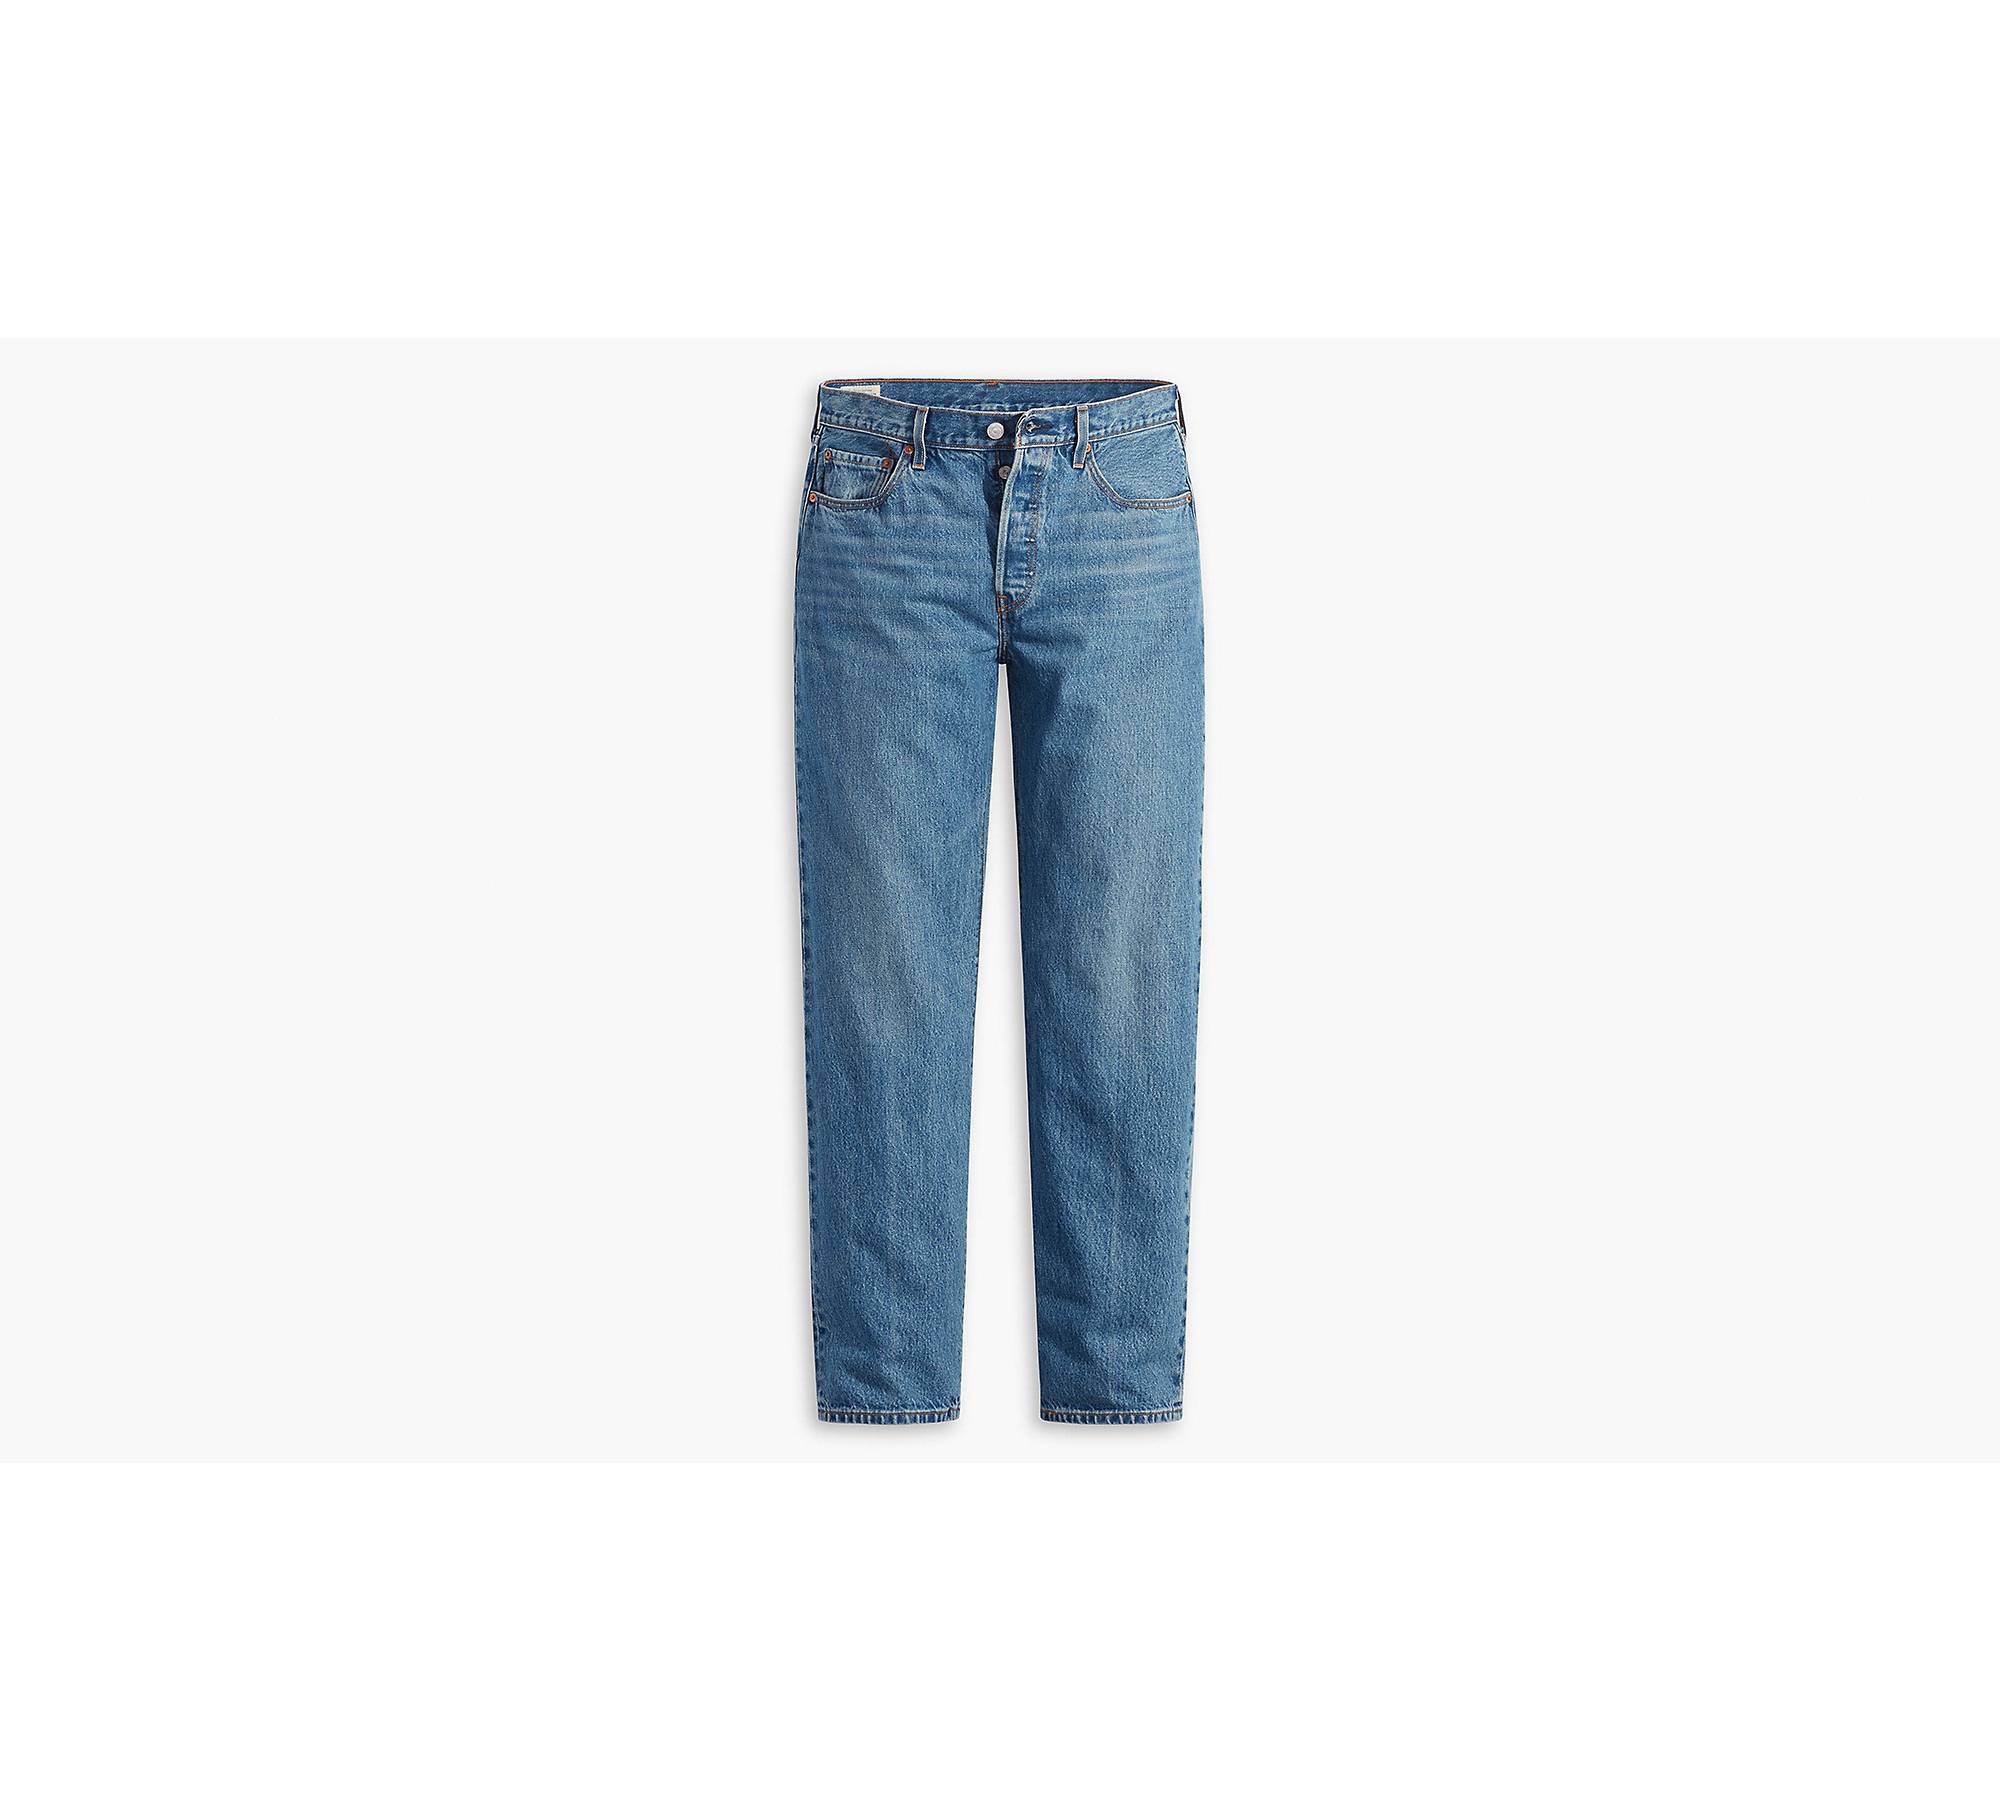 Vintage LEVI'S Jeans High Waisted/ Mid Waisted Denim Mom Jeans 501